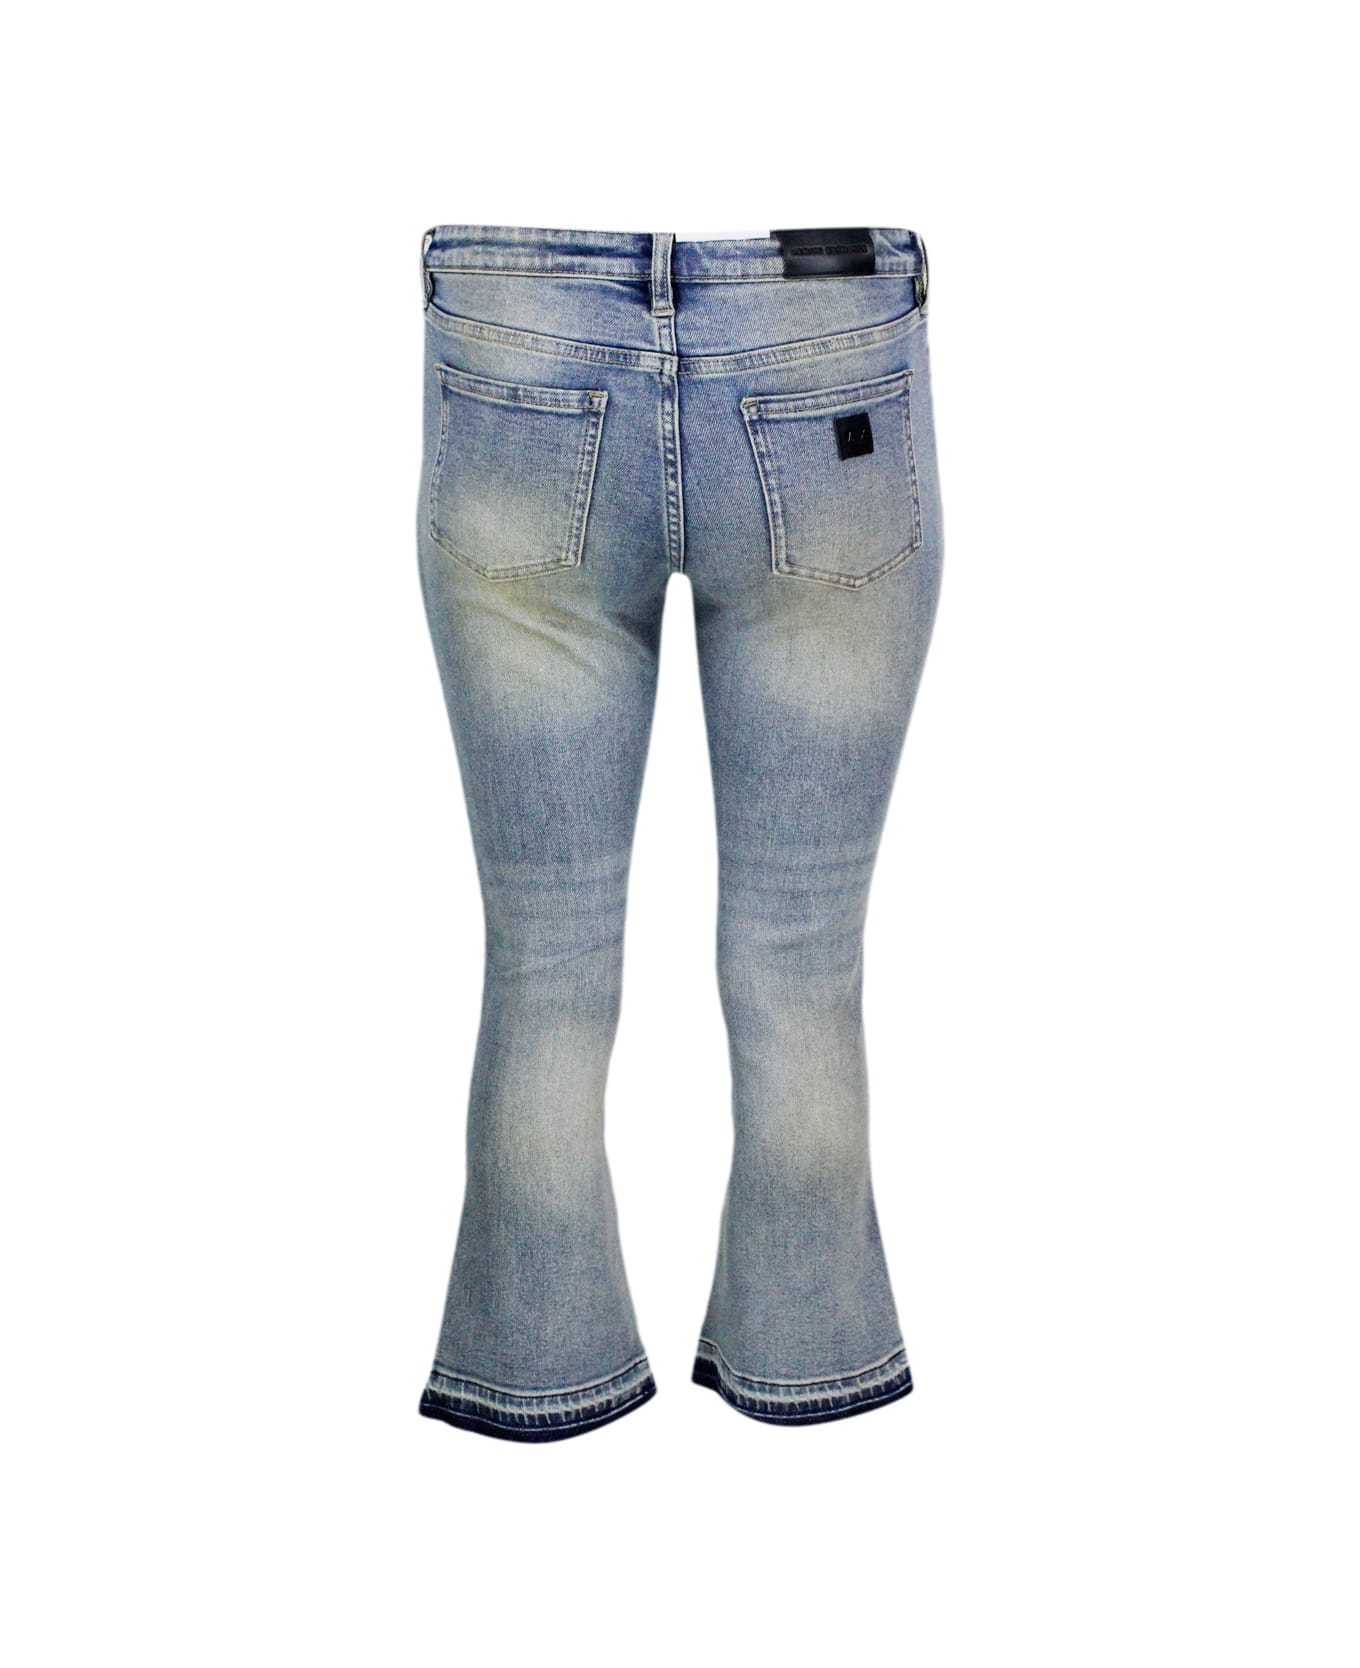 Armani Collezioni Stretch Jeans In Vintage Effect Denim Flare Capri Model With Fringed Trumpet Bottom. - Denim